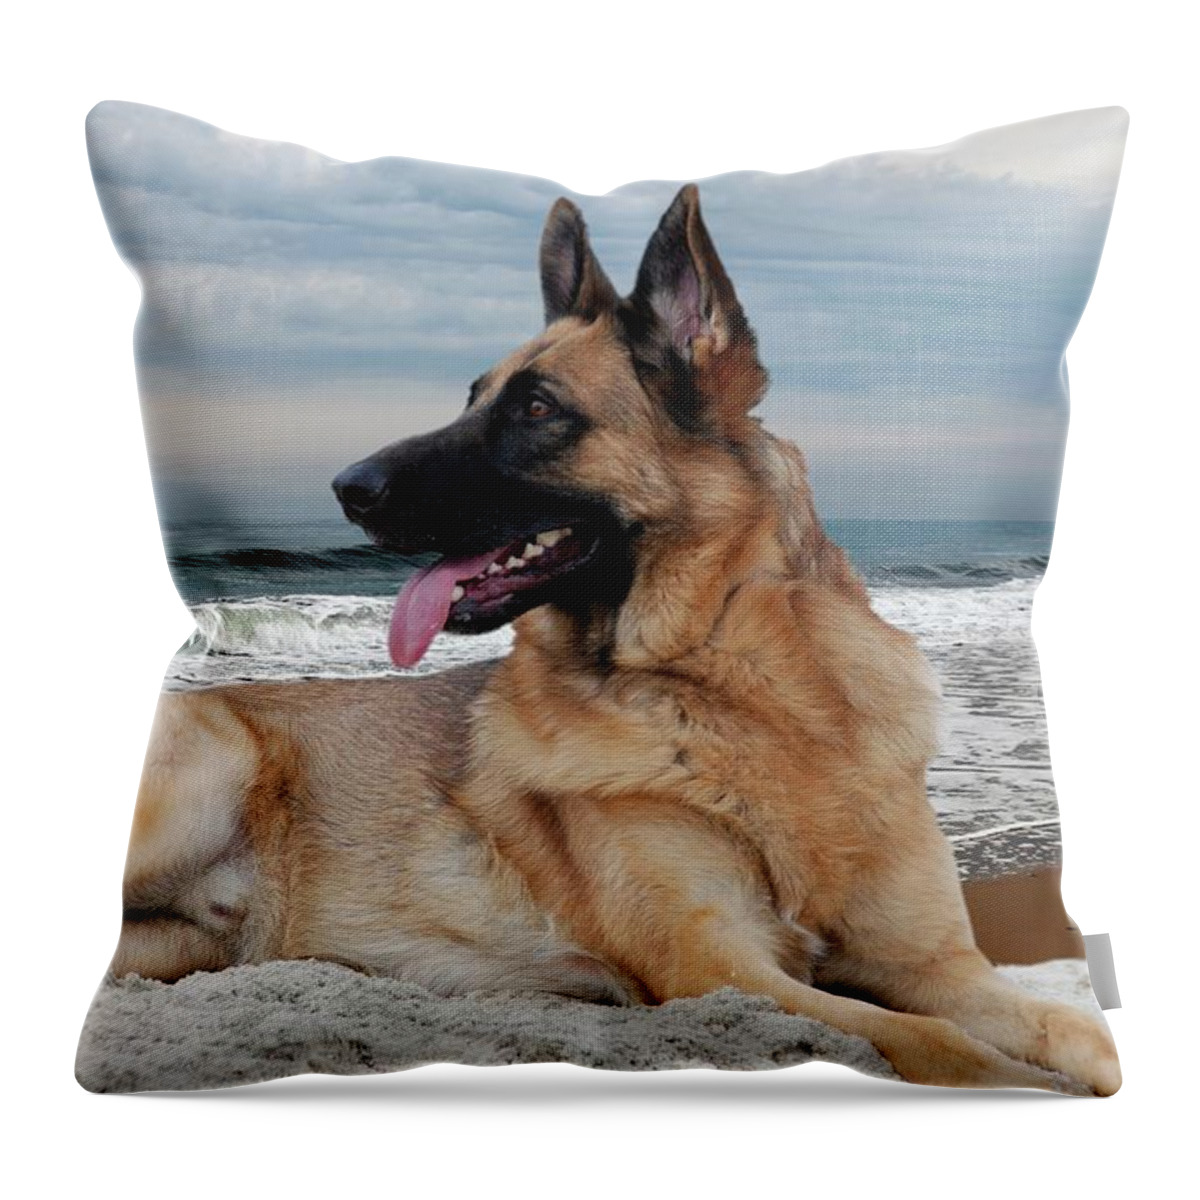 German Shepherd Dogs Throw Pillow featuring the photograph King Of The Beach - German Shepherd Dog by Angie Tirado